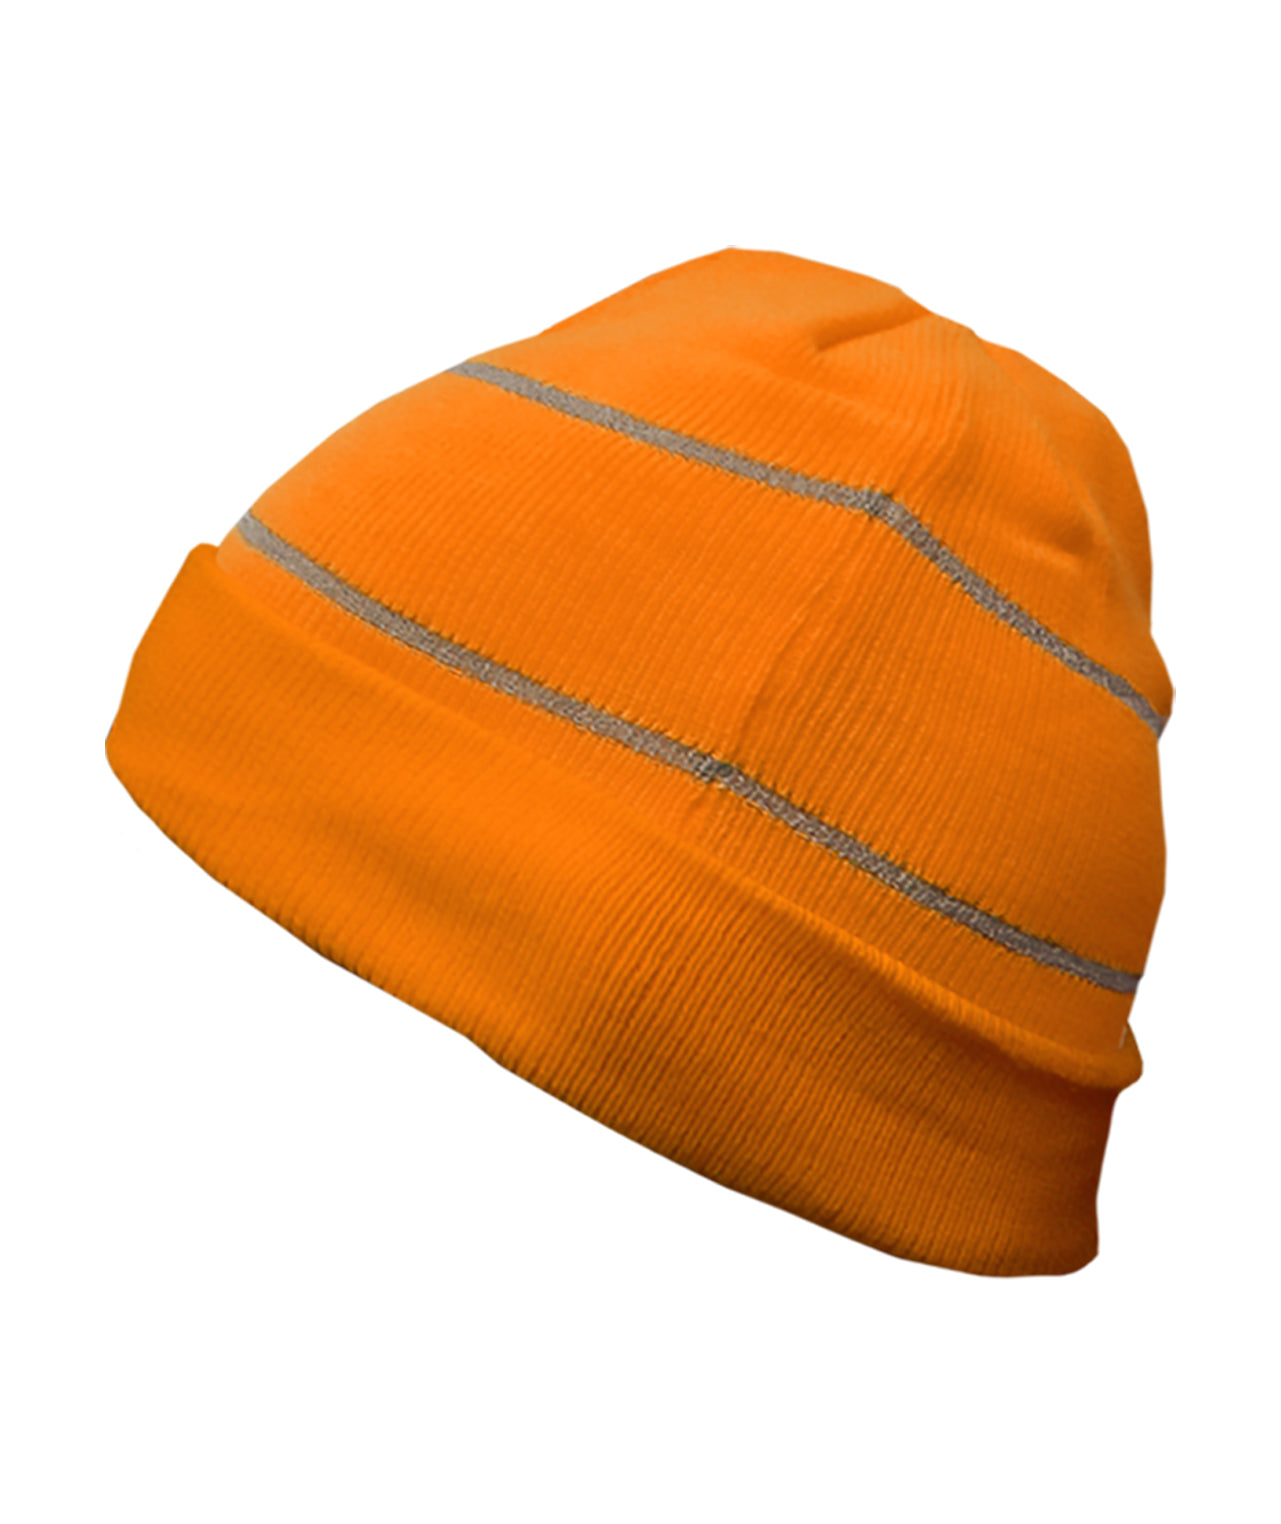 808RTOR Safety Orange Cuffed Beanie: Reflective Thread